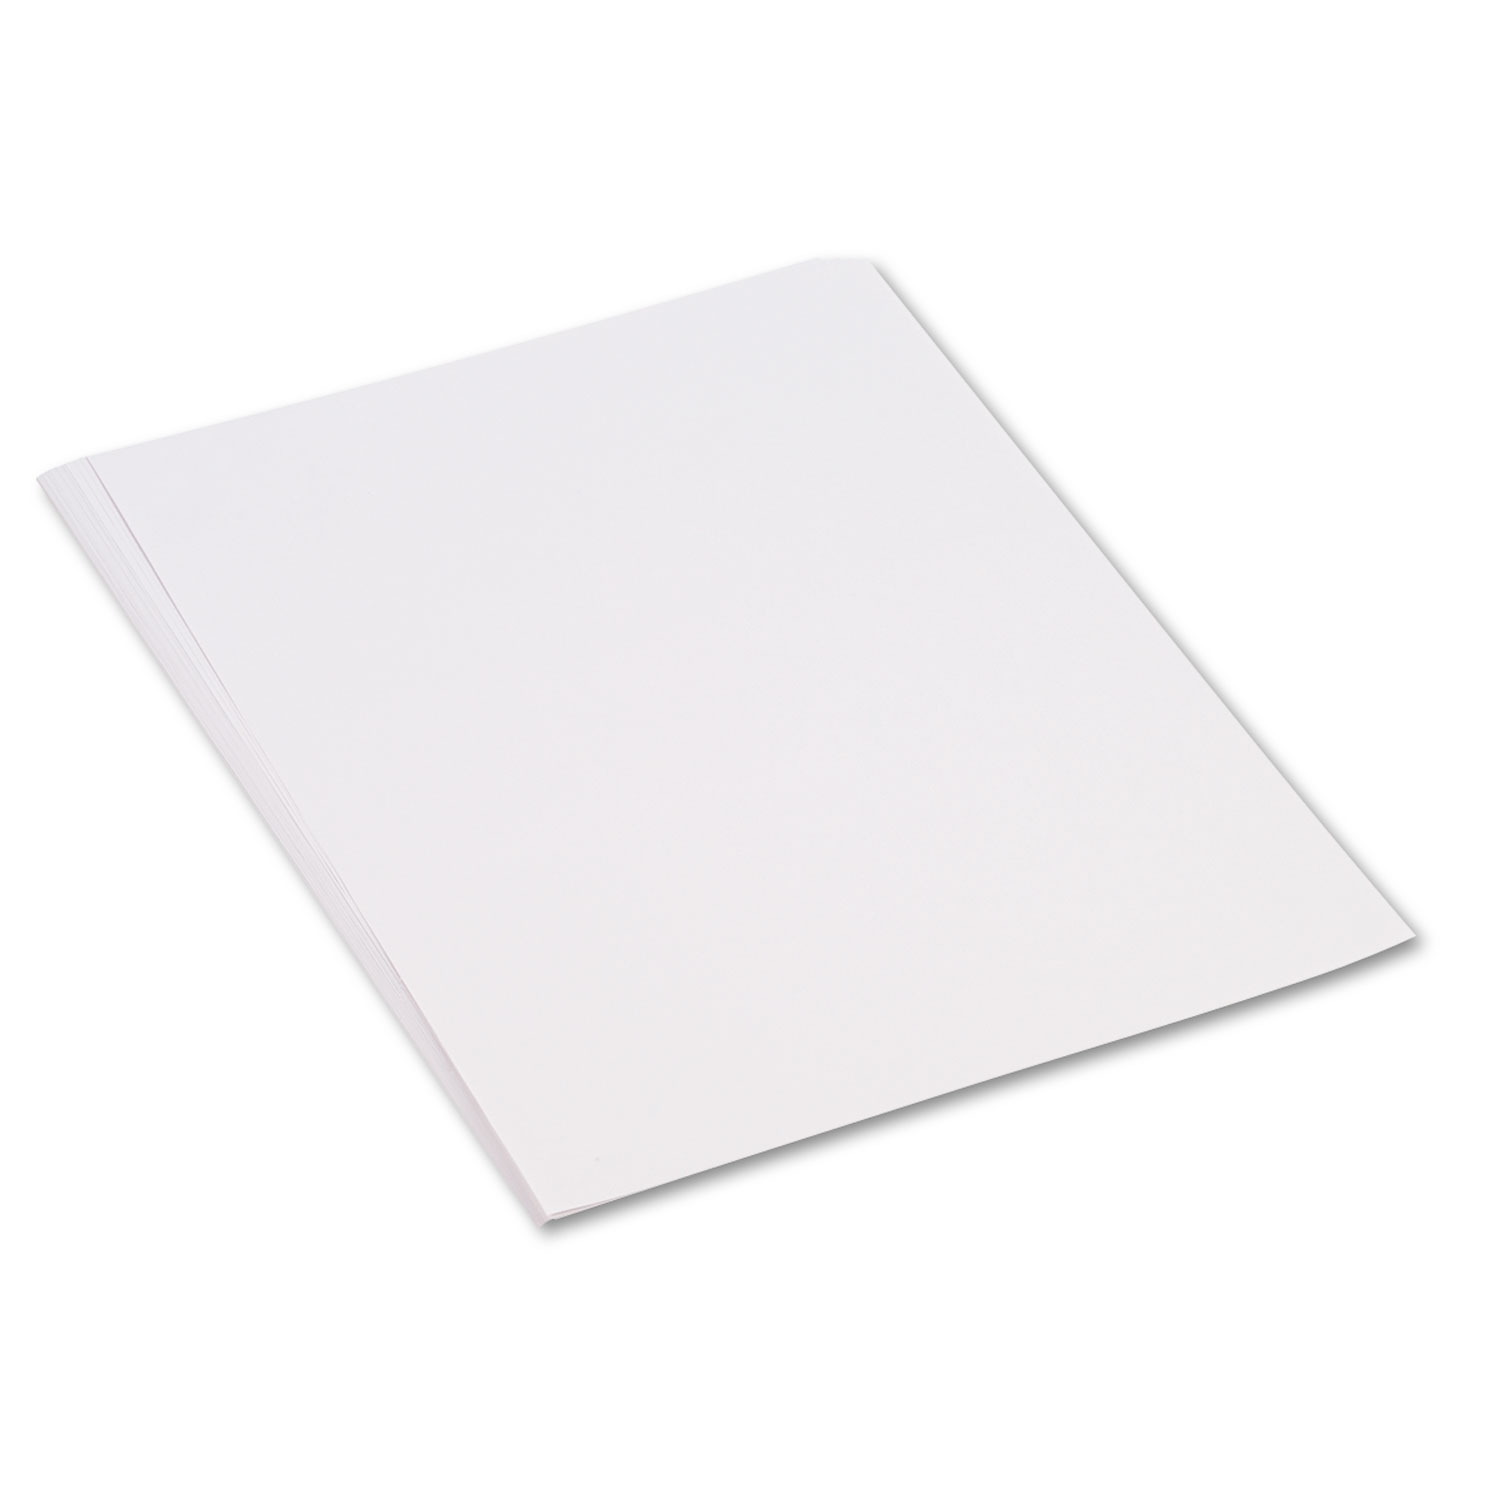 Construction Paper, 58lb, 18 x 24, White, 50/Pack